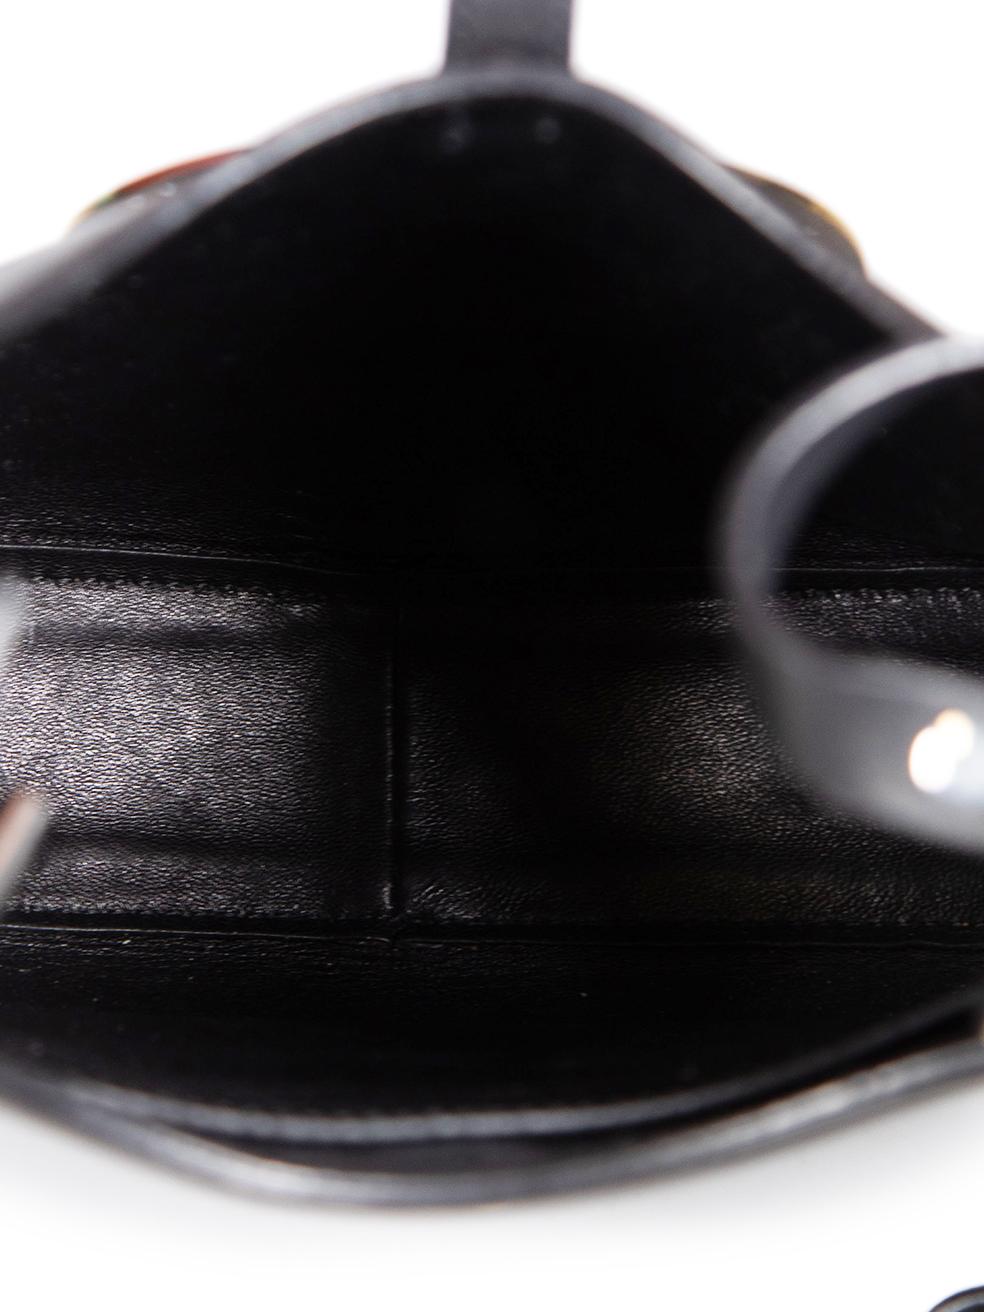 Loewe Black Leather Joyce Small Shoulder Bag For Sale 1